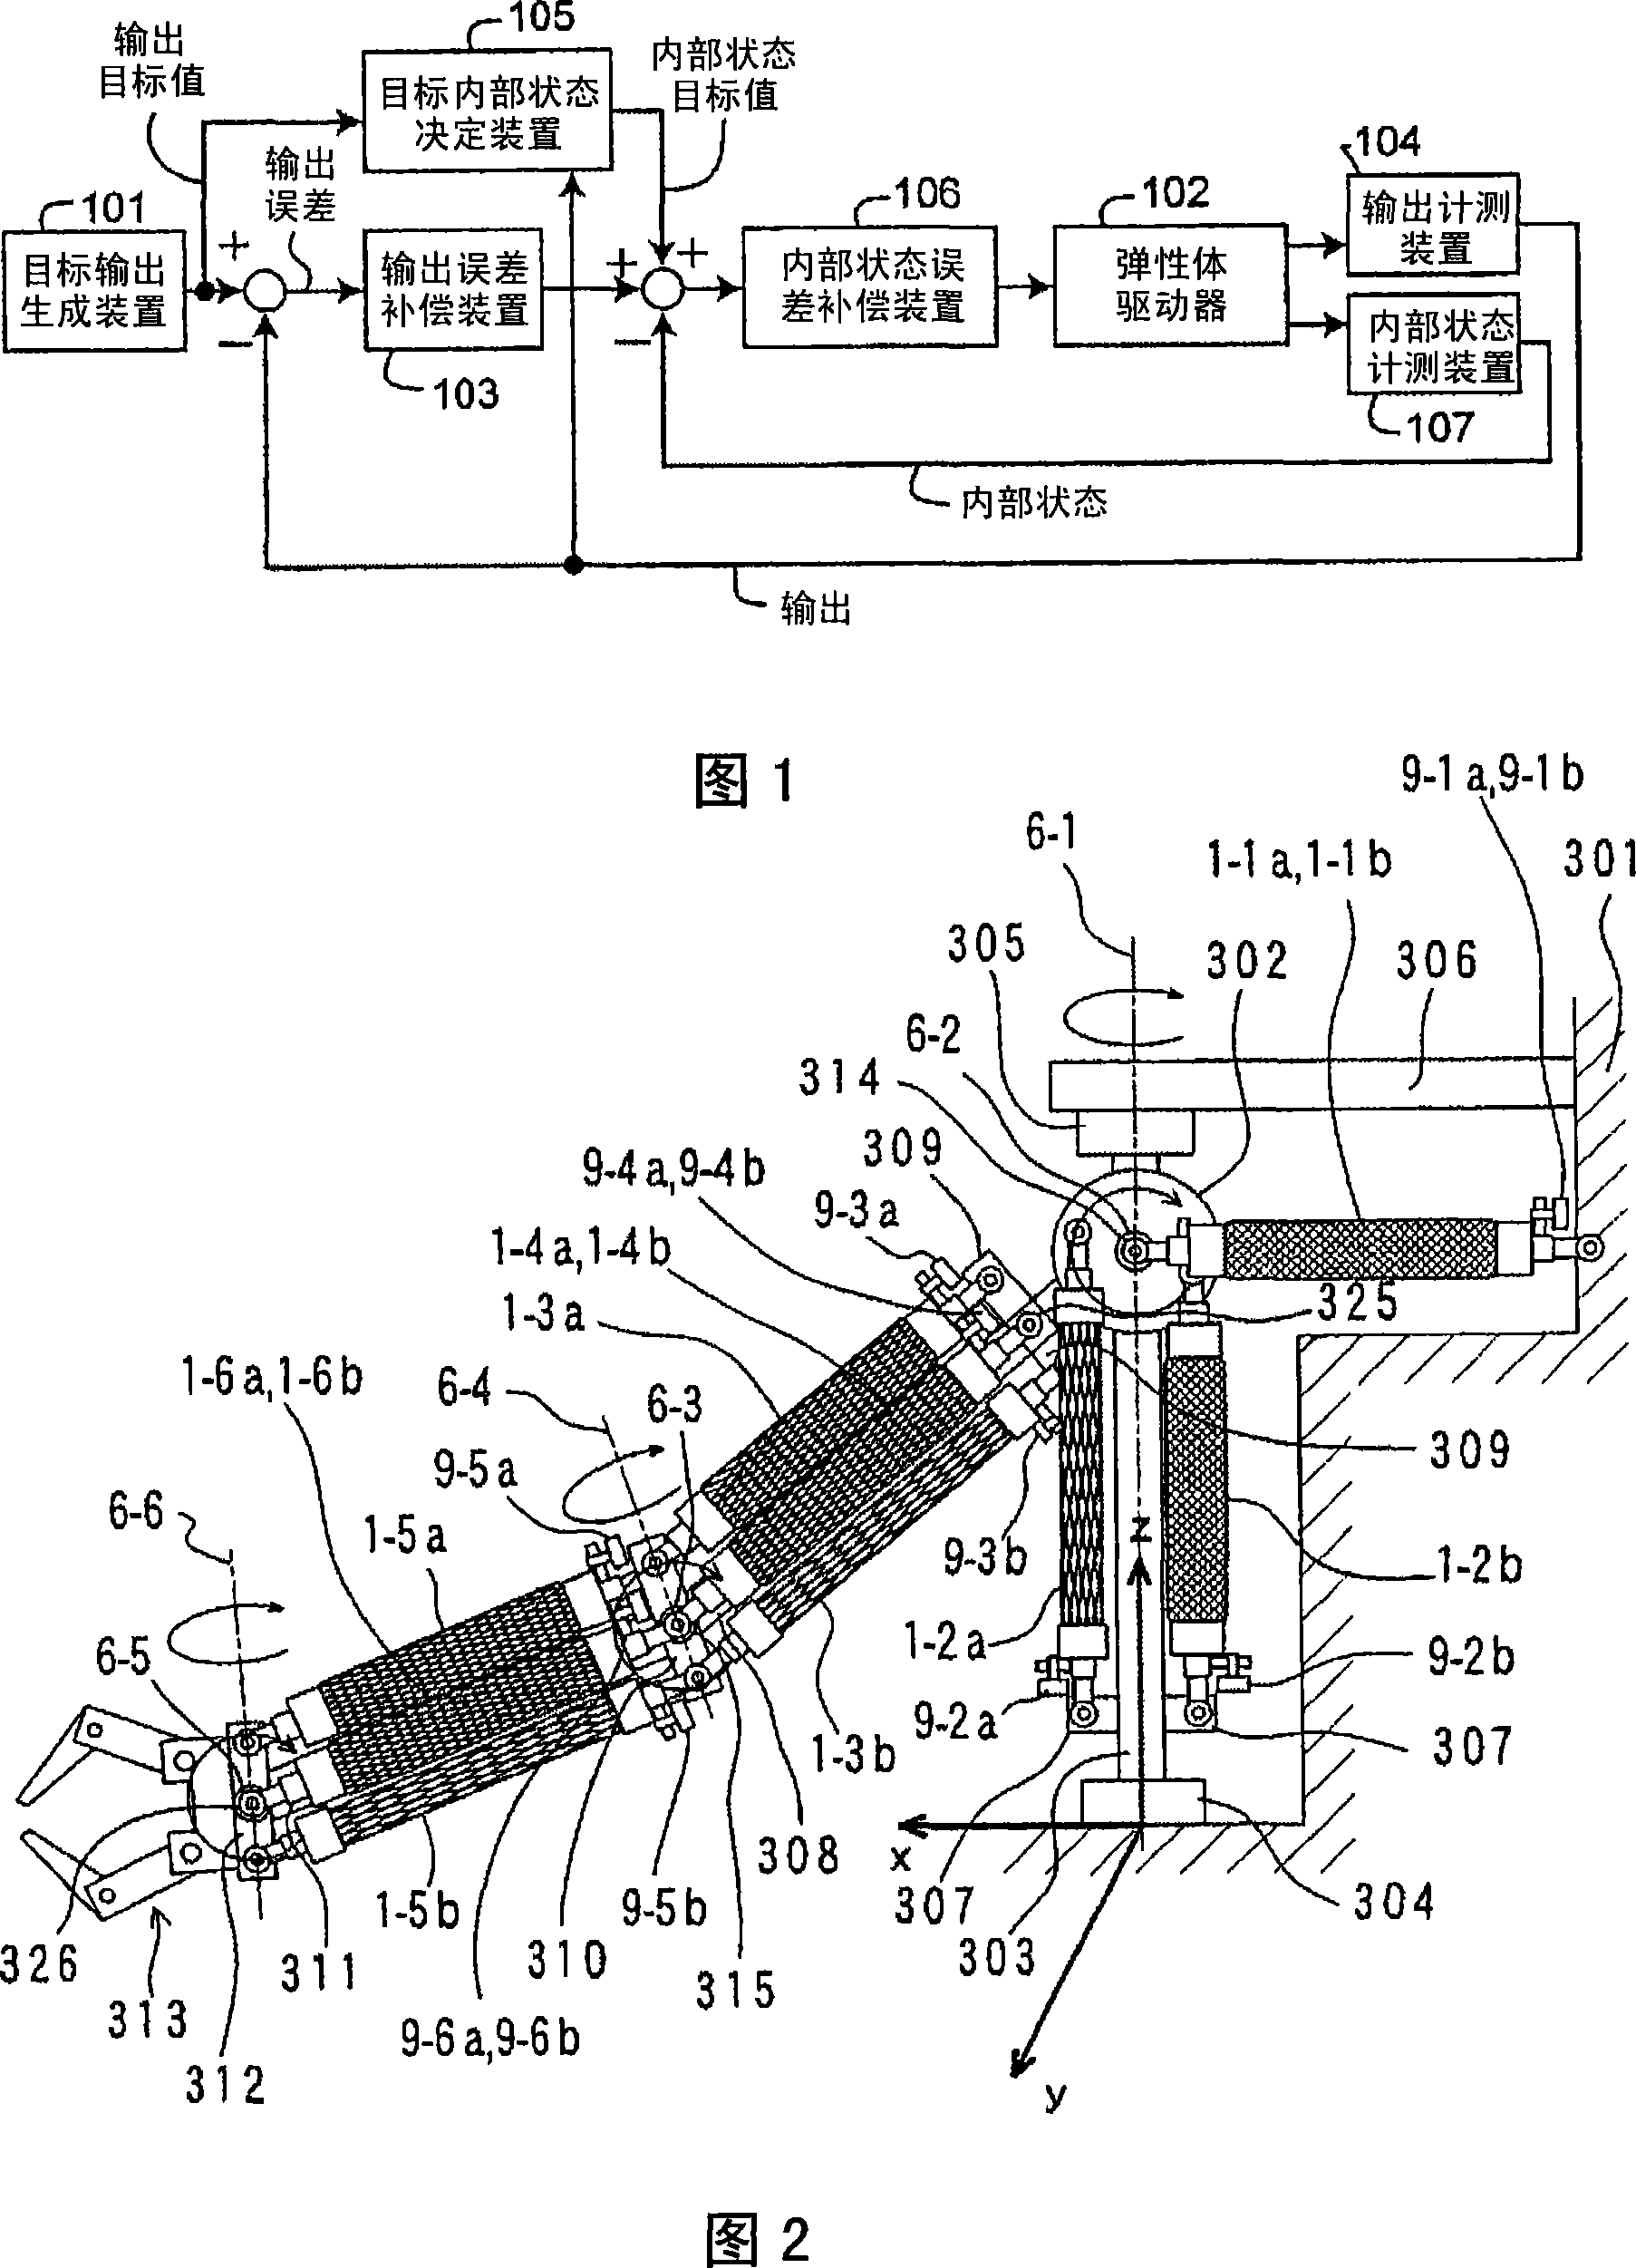 Apparatus and method for controlling elastic actuator